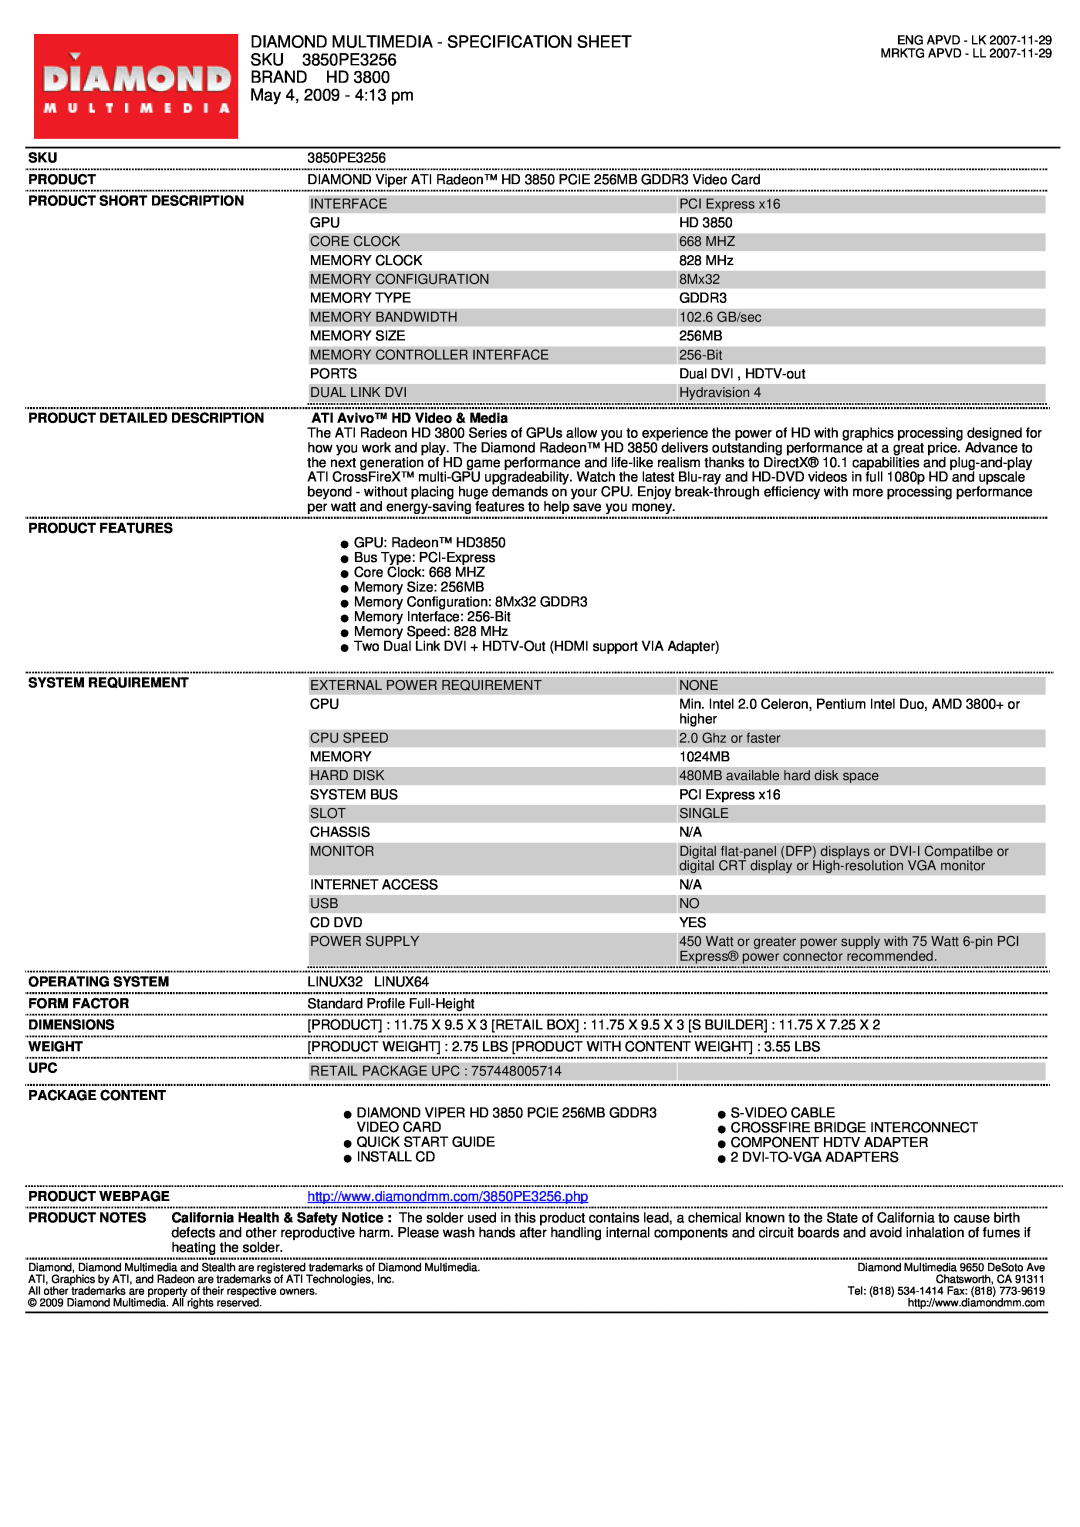 Diamond Multimedia 3850PE3256 specifications Diamond Multimedia - Specification Sheet, Brand Hd, May 4, 2009 - 413 pm 